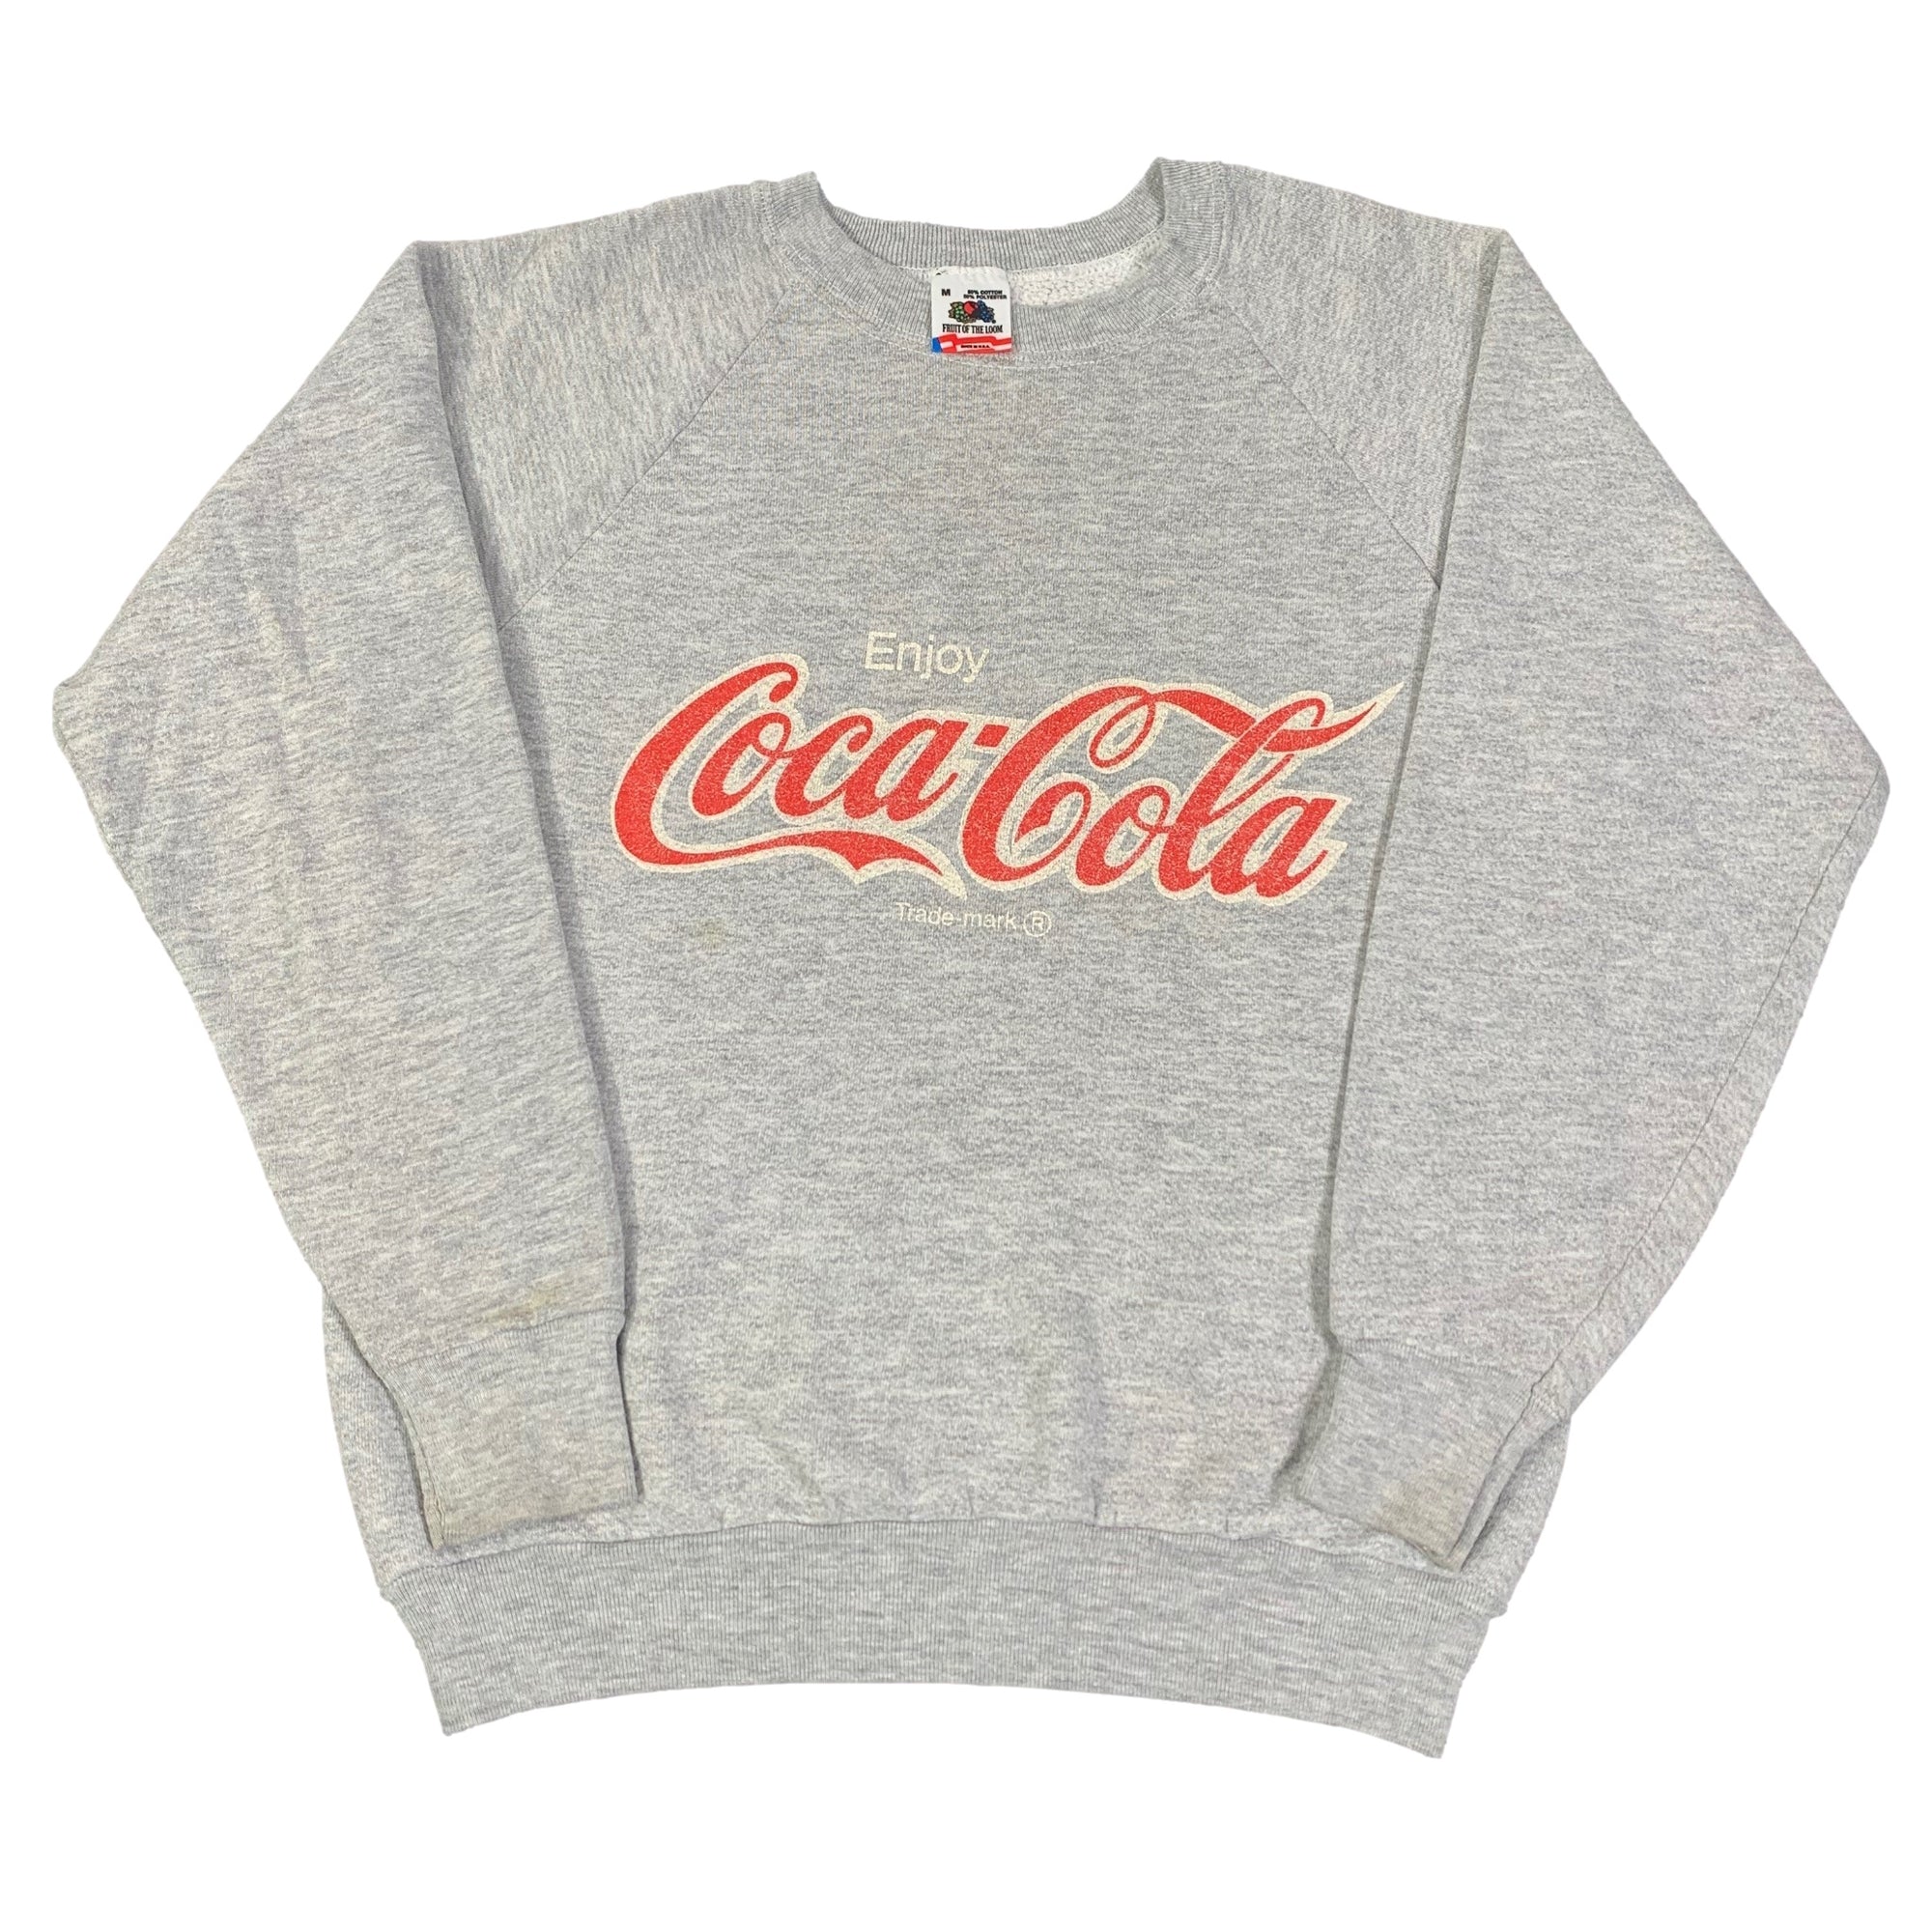 Vintage Coca-Cola "Enjoy" Crewneck Sweatshirt - jointcustodydc